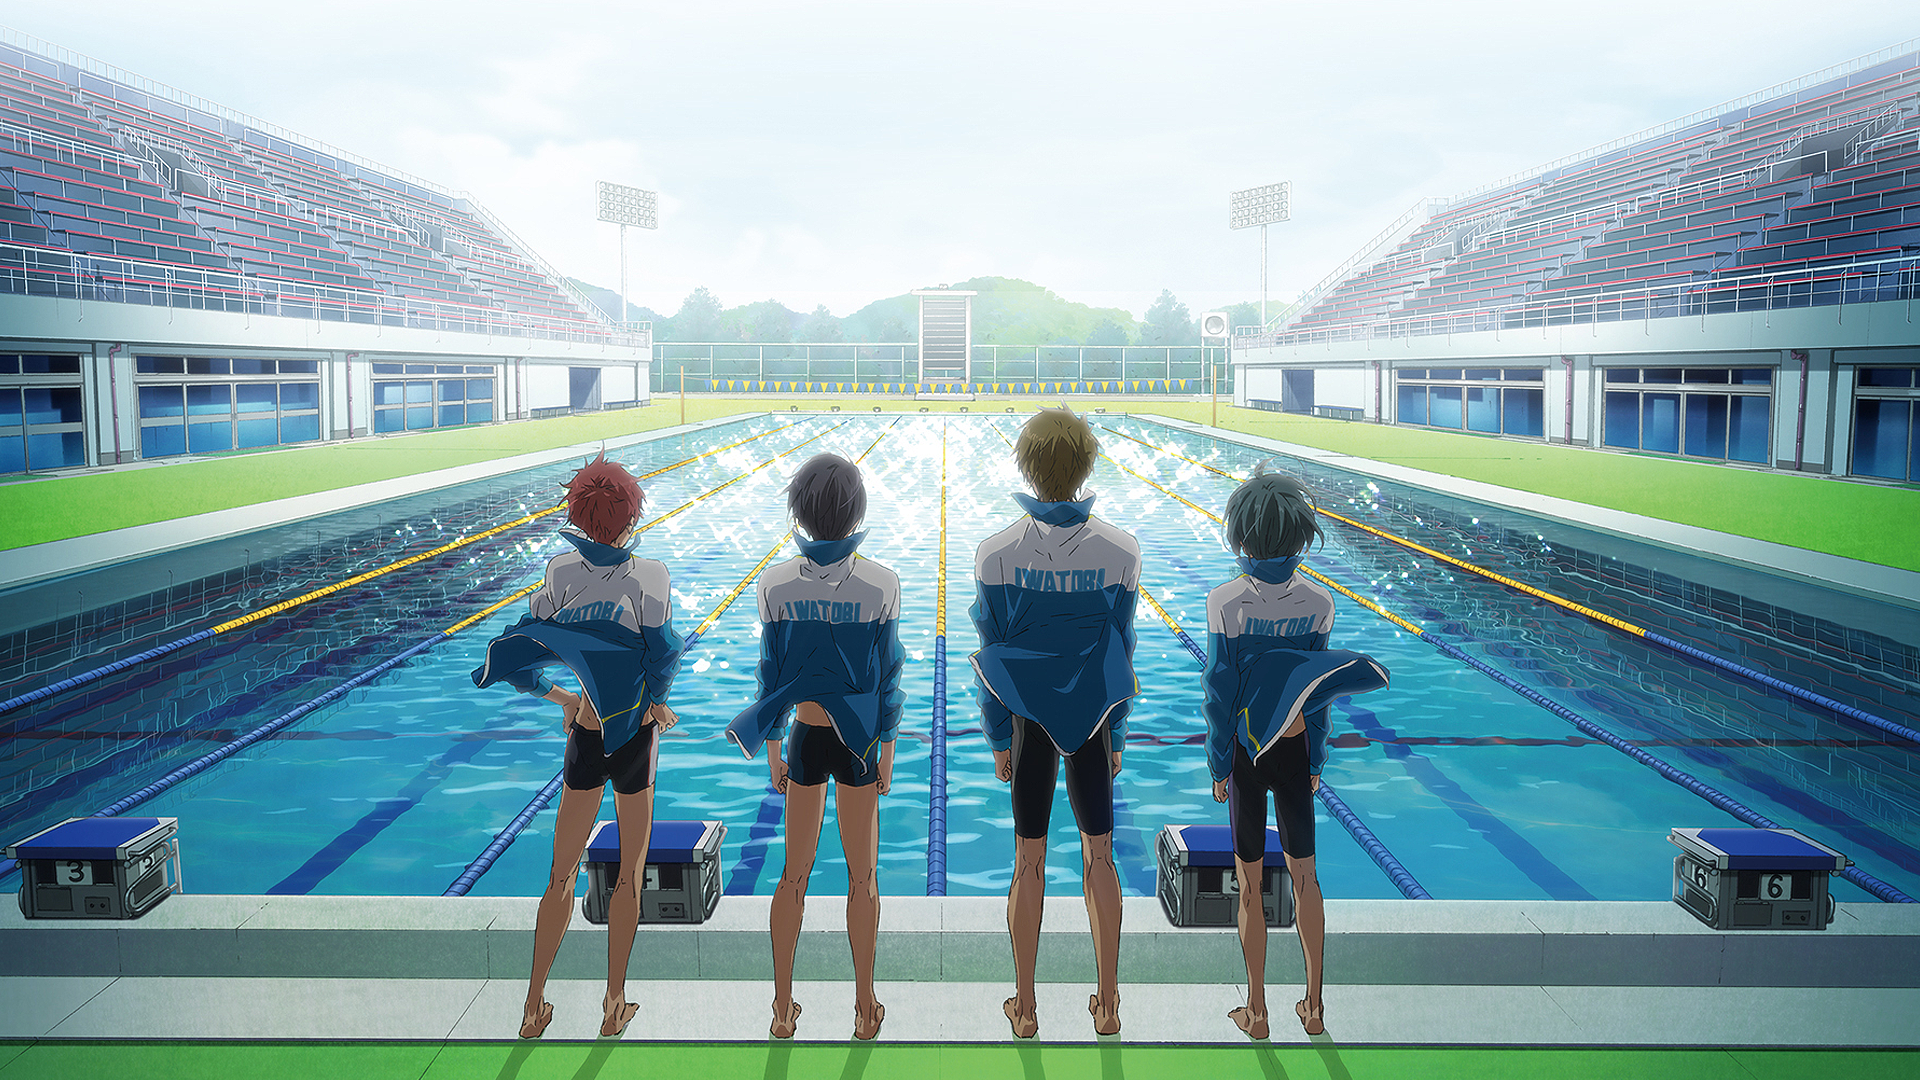 Free! Iwatobi Swim Club - Other & Anime Background Wallpapers on Desktop  Nexus (Image 2186806)